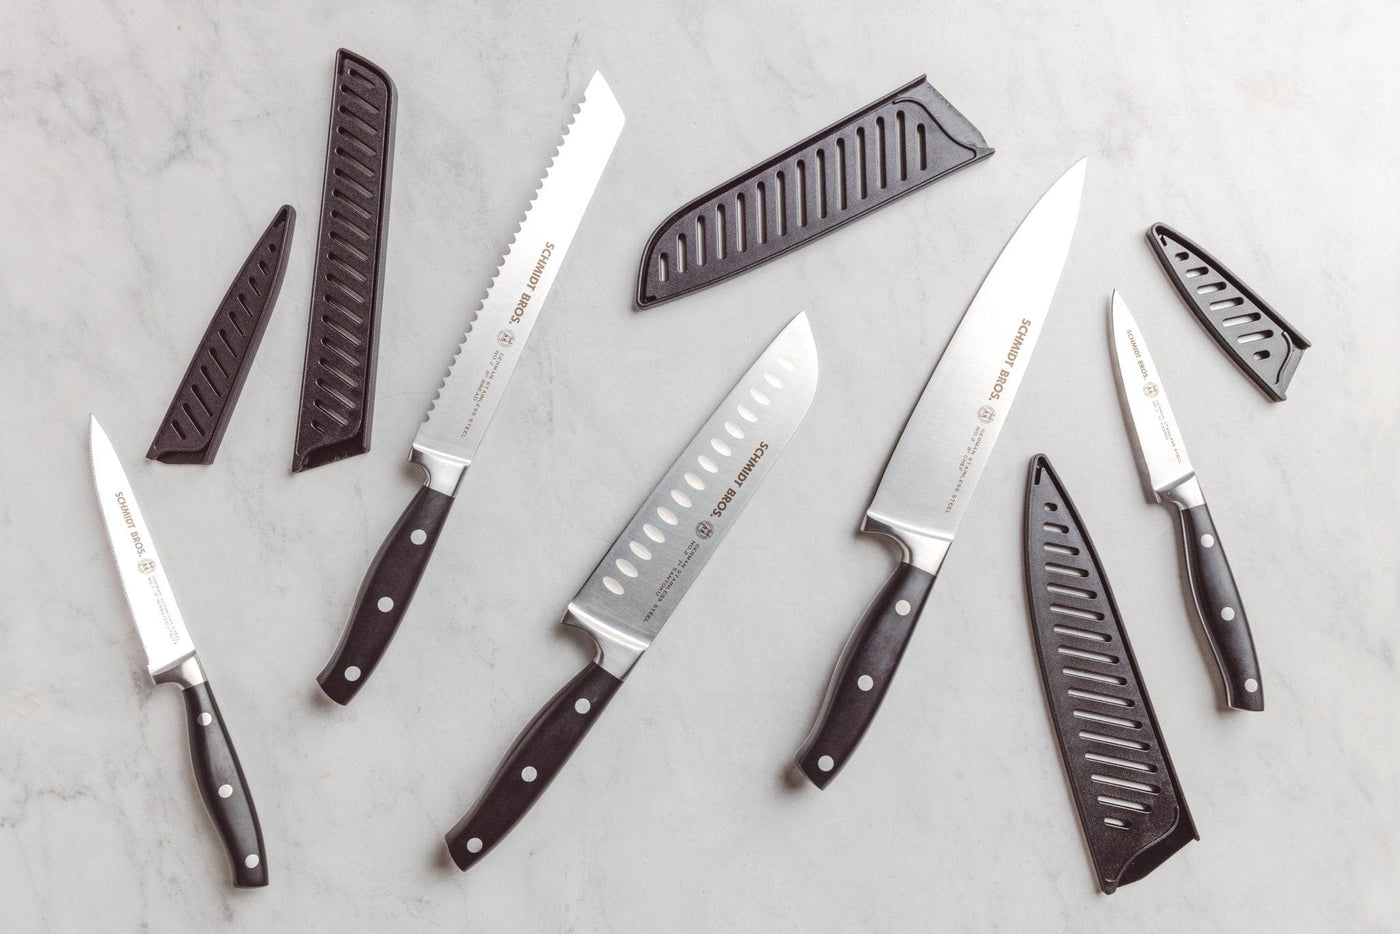 Mumulo Kitchen knife, Chef Knife Set With Sheath, German Stainless